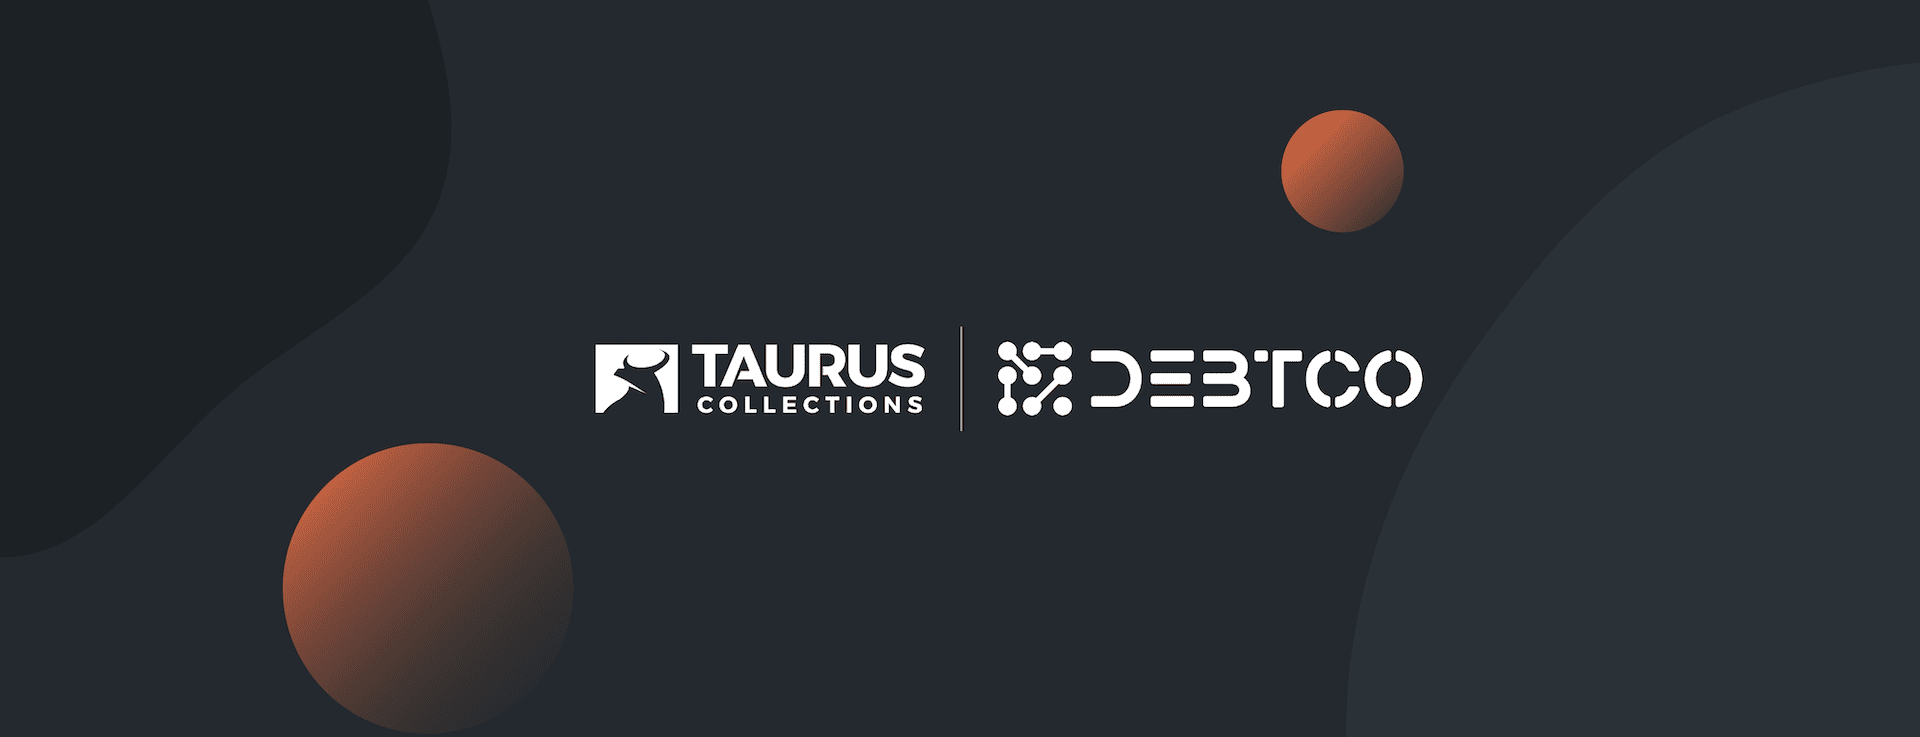 DebtCo & Taurus announce strategic debt collection partnership